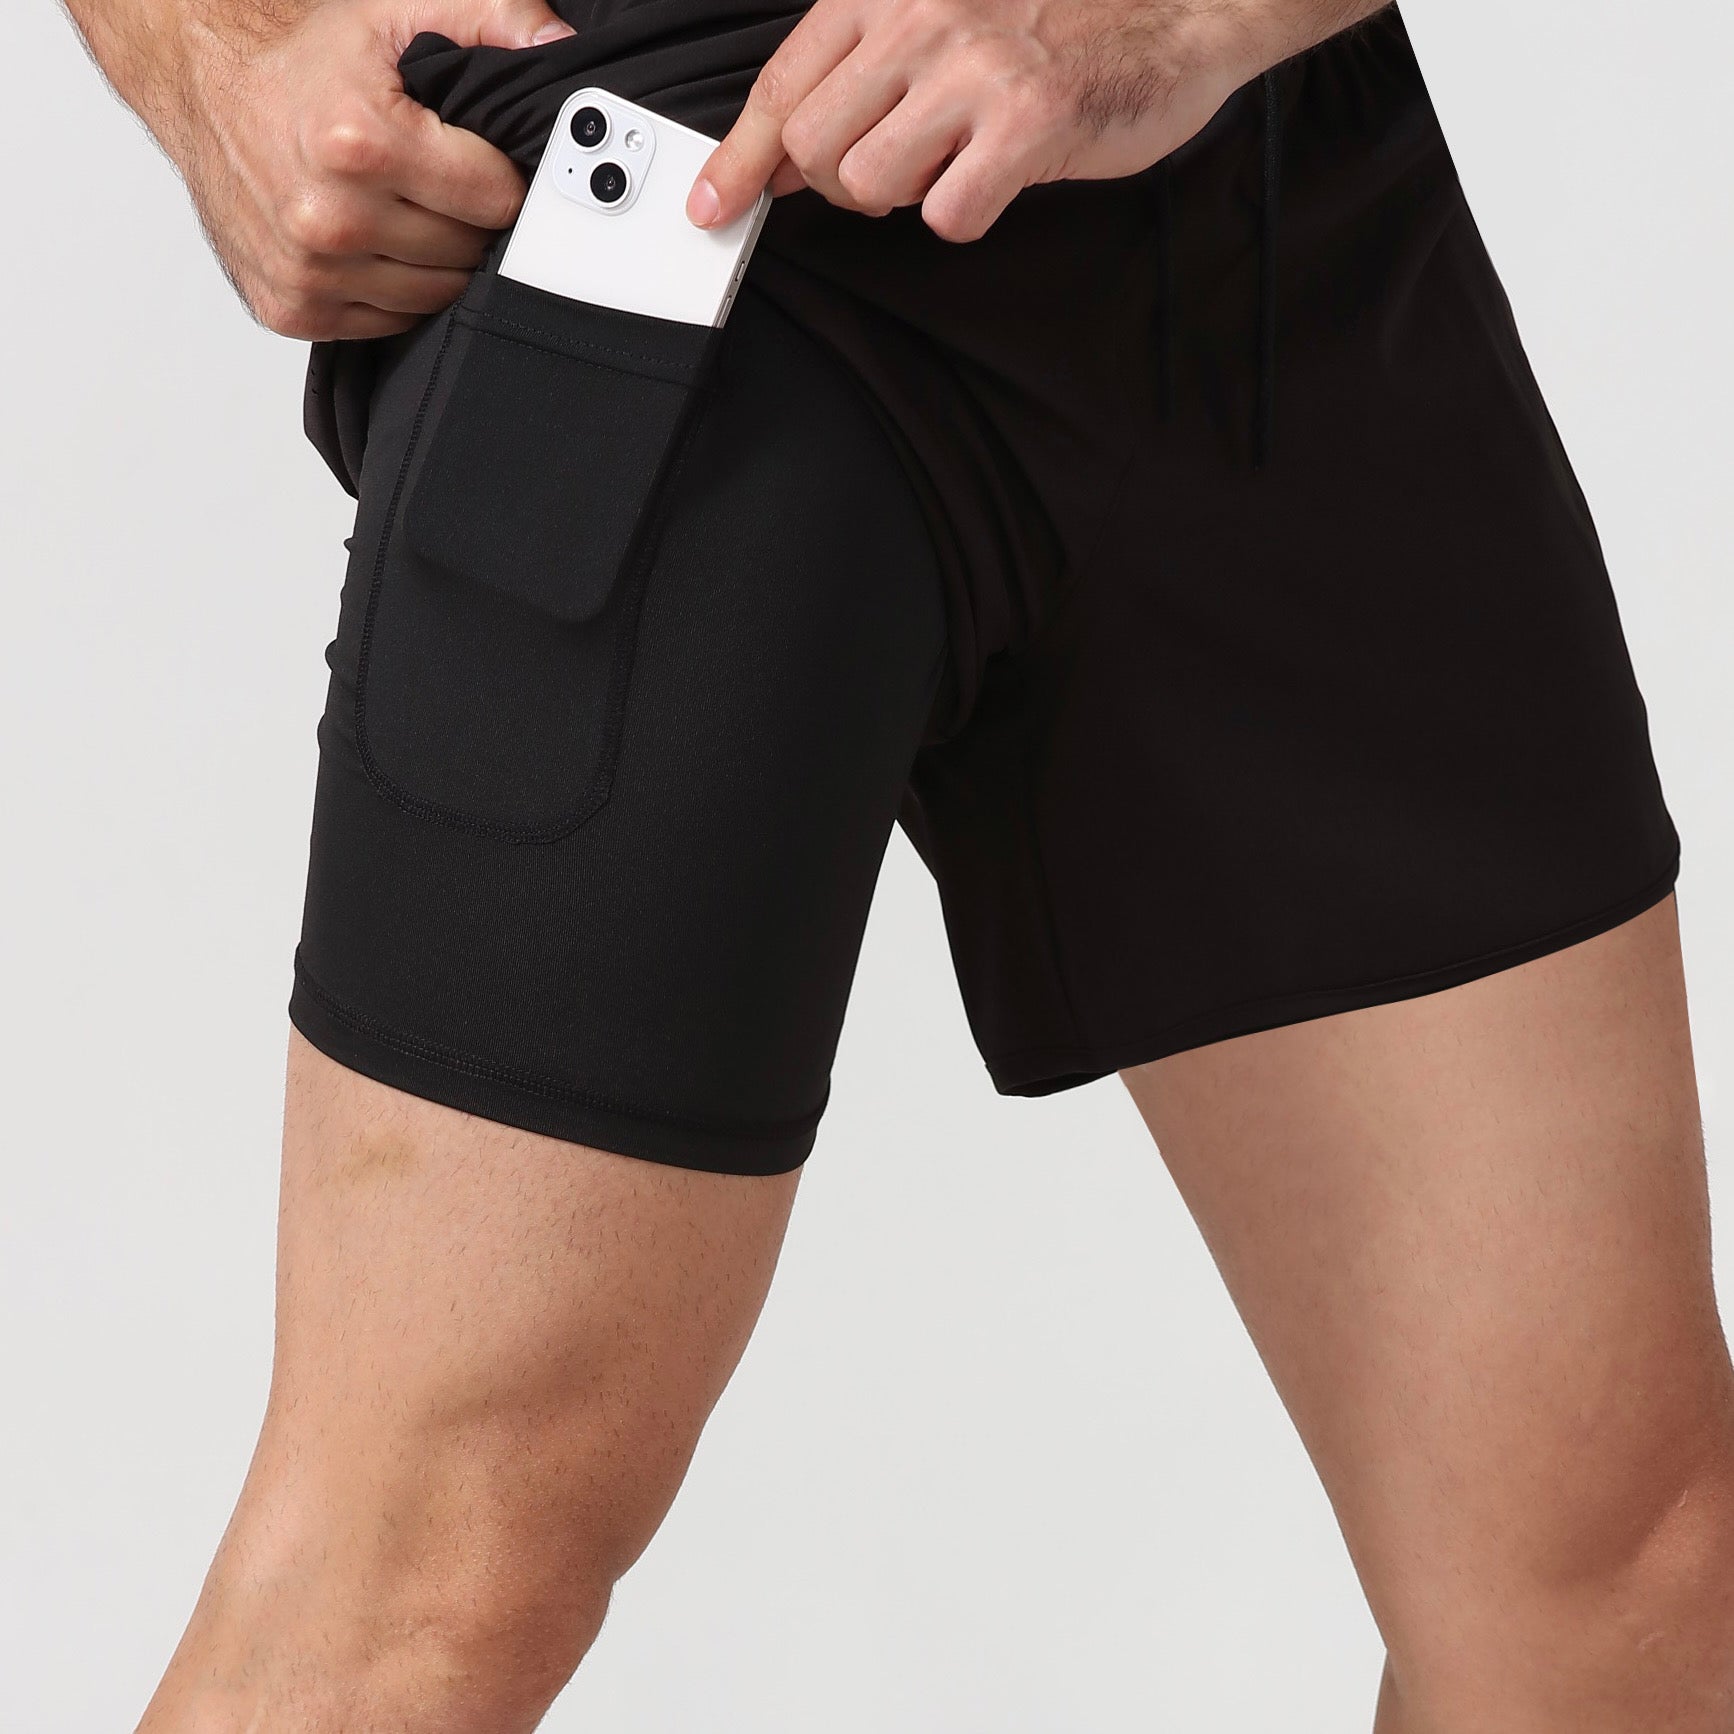 Classic Black】AKIV 2-in-1 Multi-Pocket Shorts (Unisex inner tight)